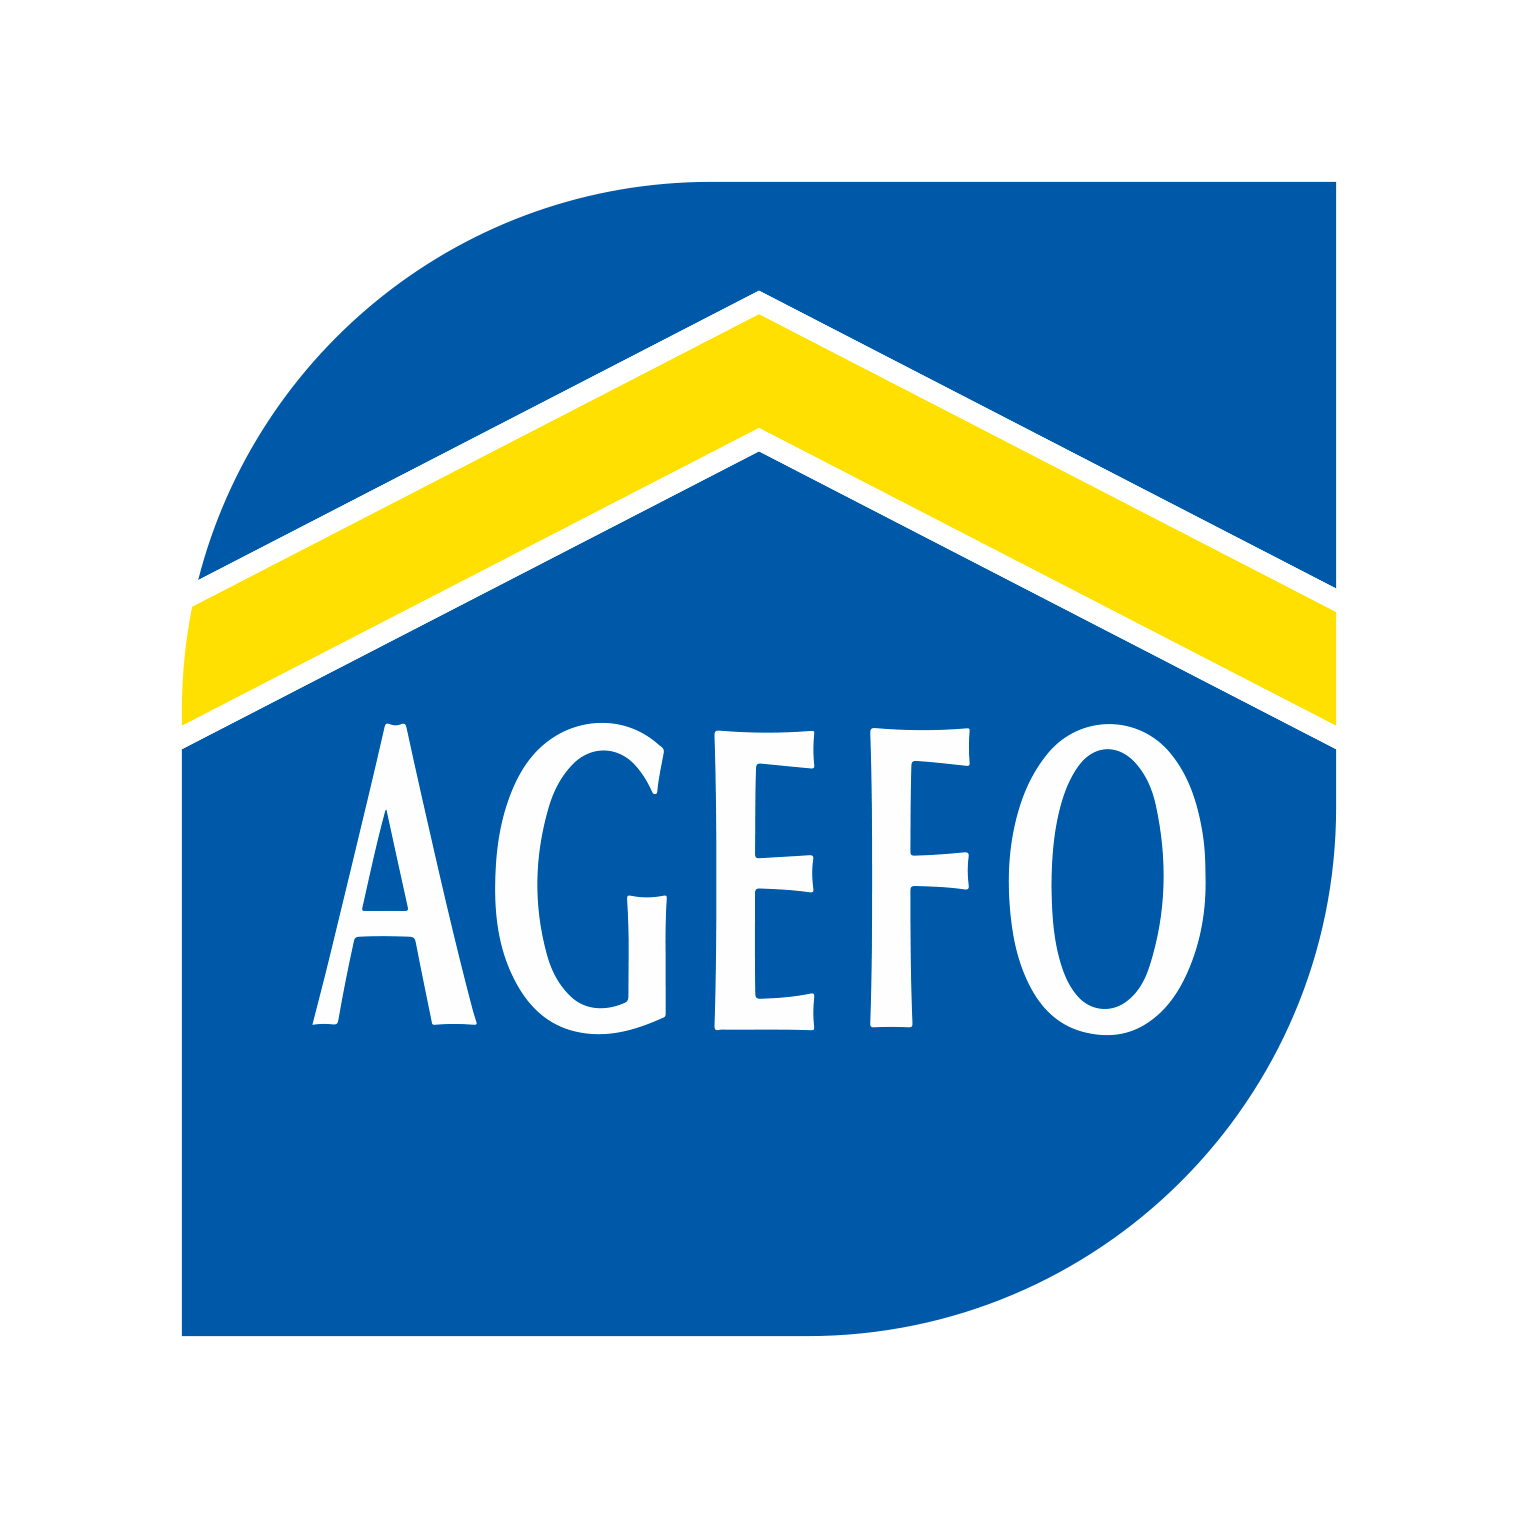 Agefo